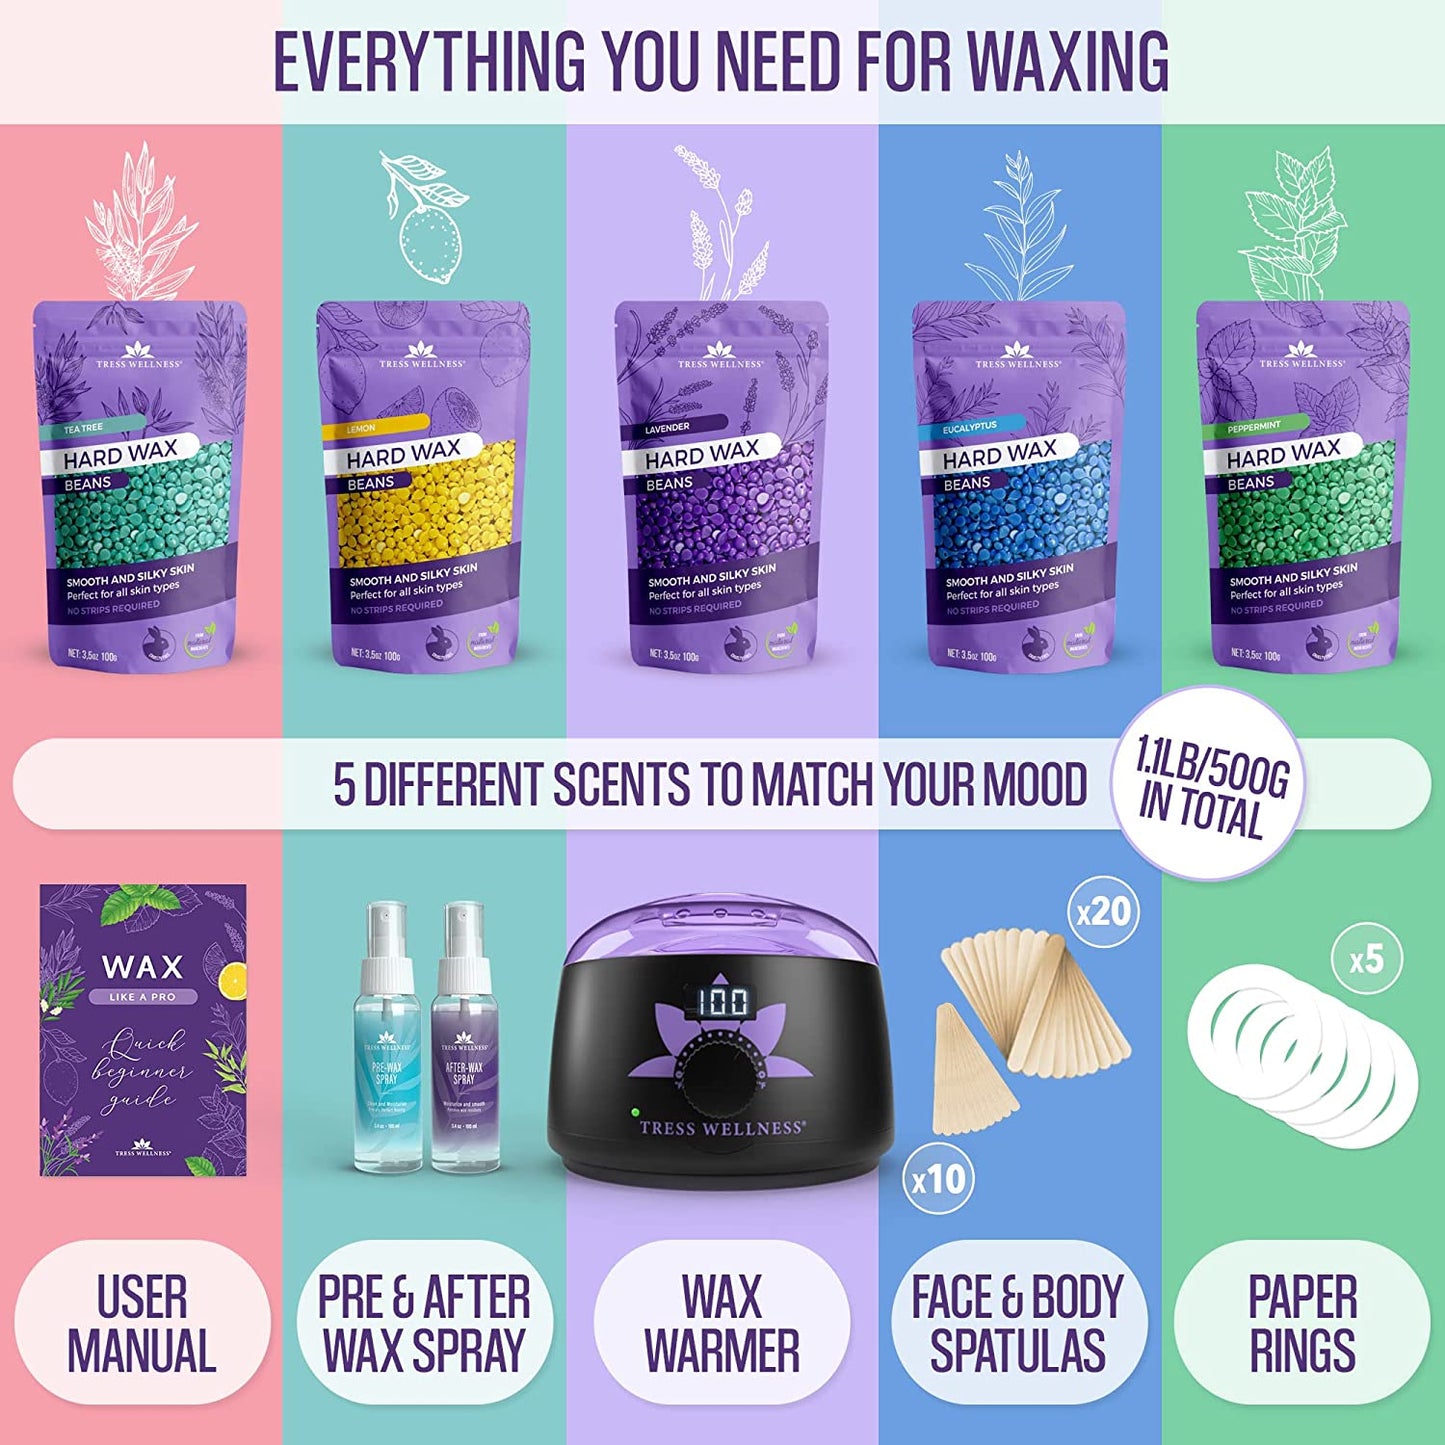 Tress Wellness Waxing Kit for Brazilian Wax +Wax Warmer +Easy to Use +For Sensitive Skin